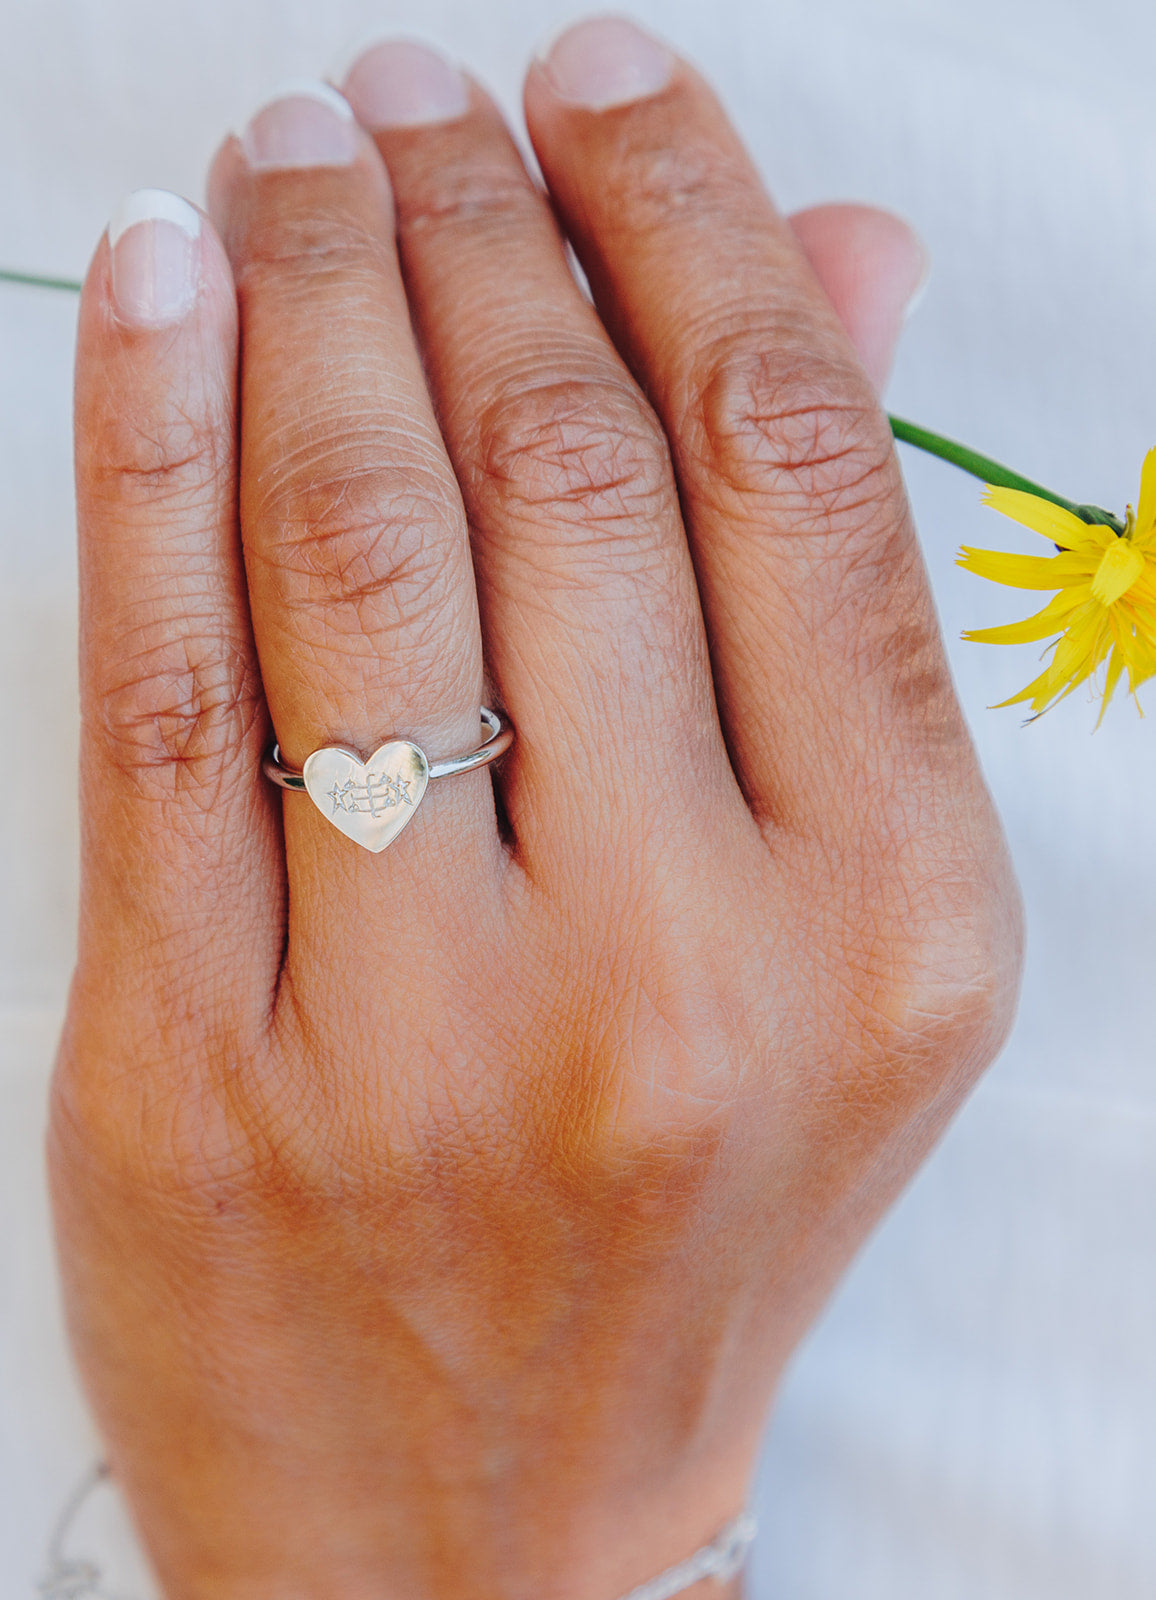 simple silver heart bahai ringstone ring holding yellow dandelion flower